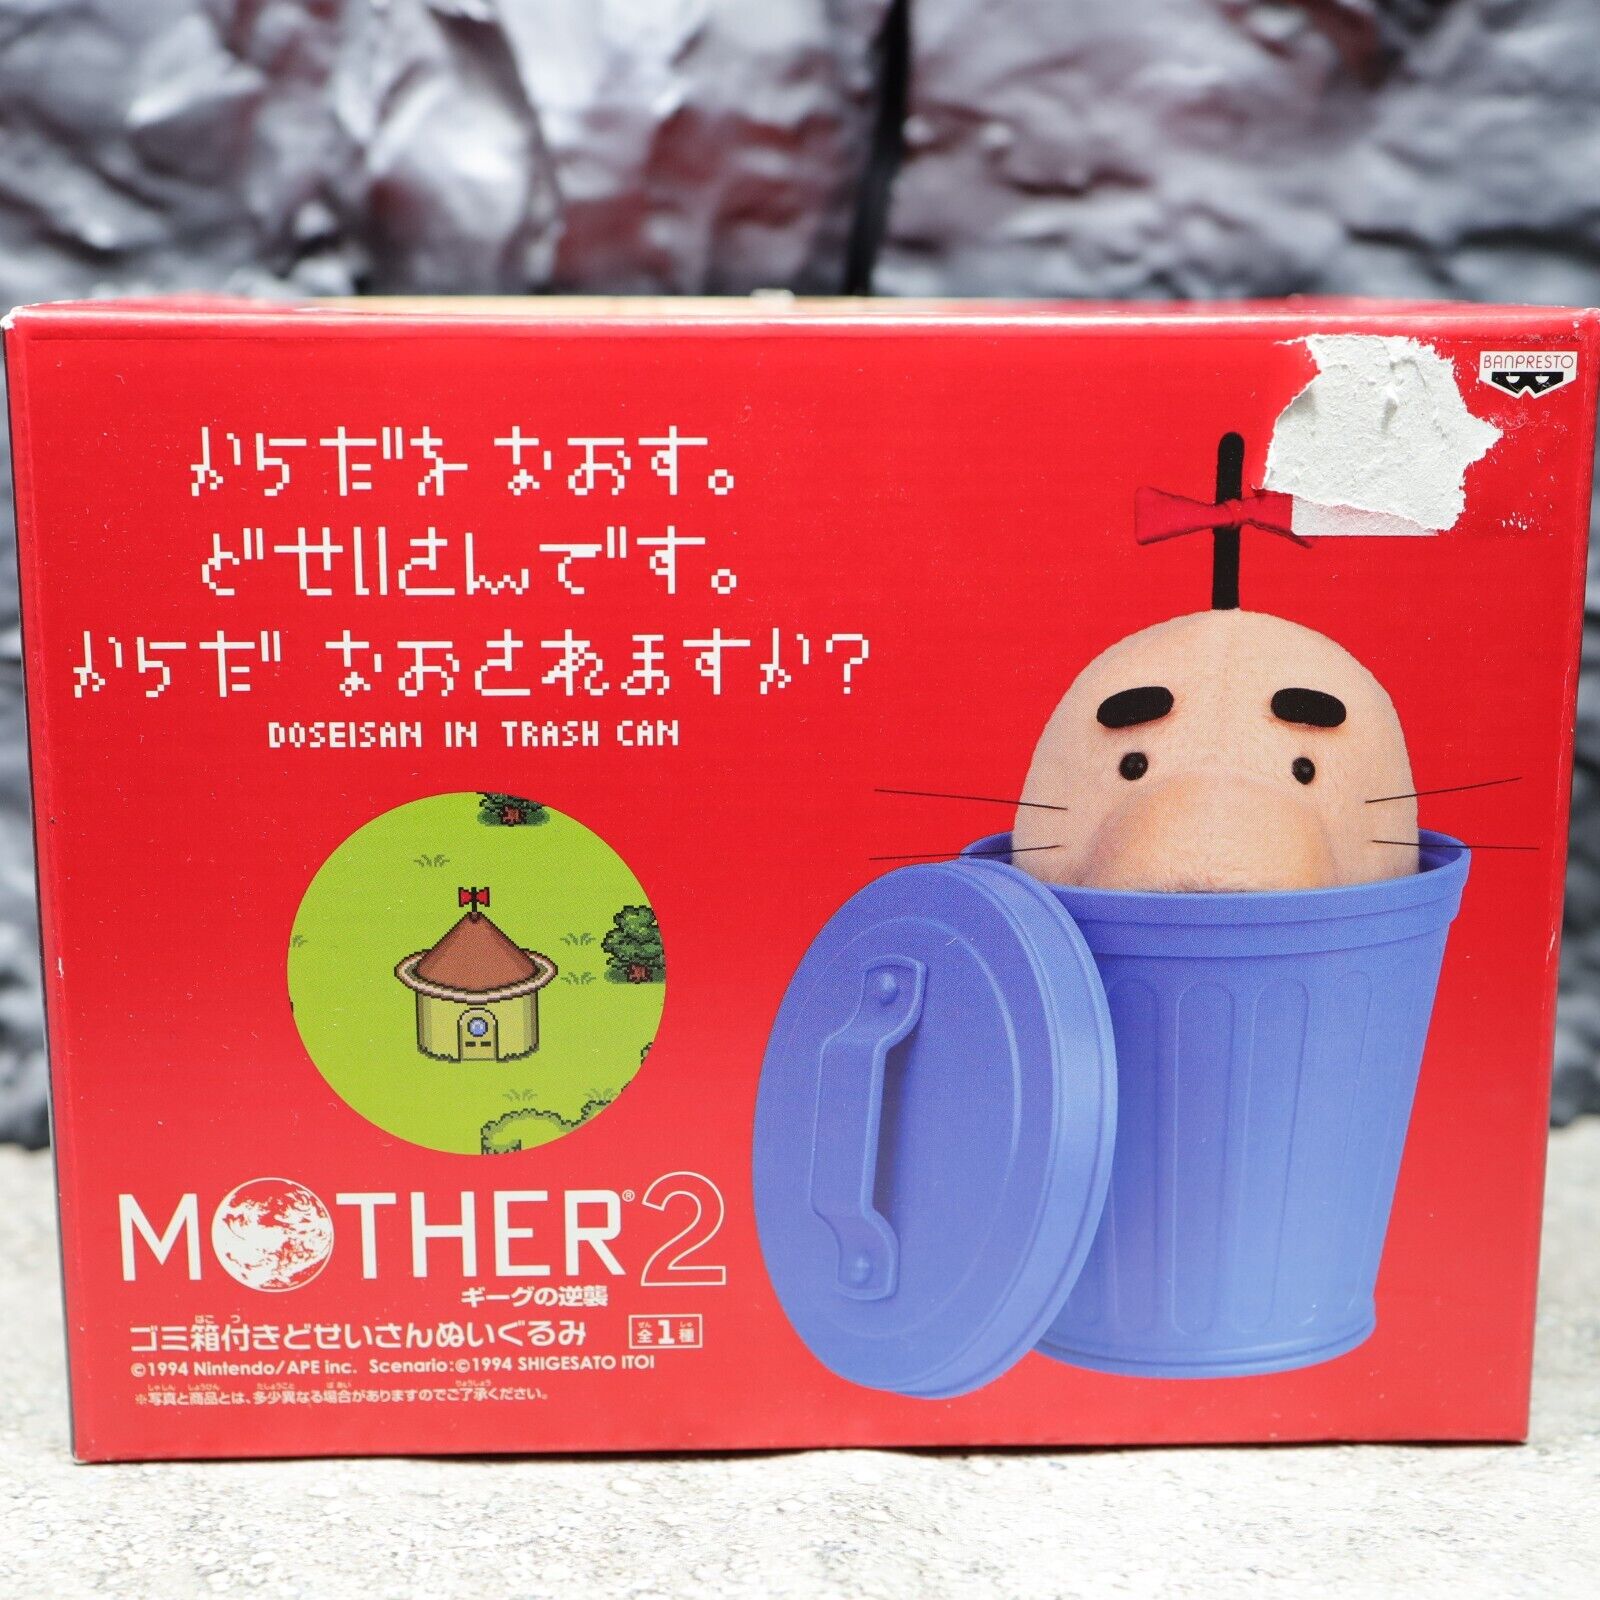 New MOTHER 2 Doseisan Plush Doll with Trash Can Mega Rare Nintendo